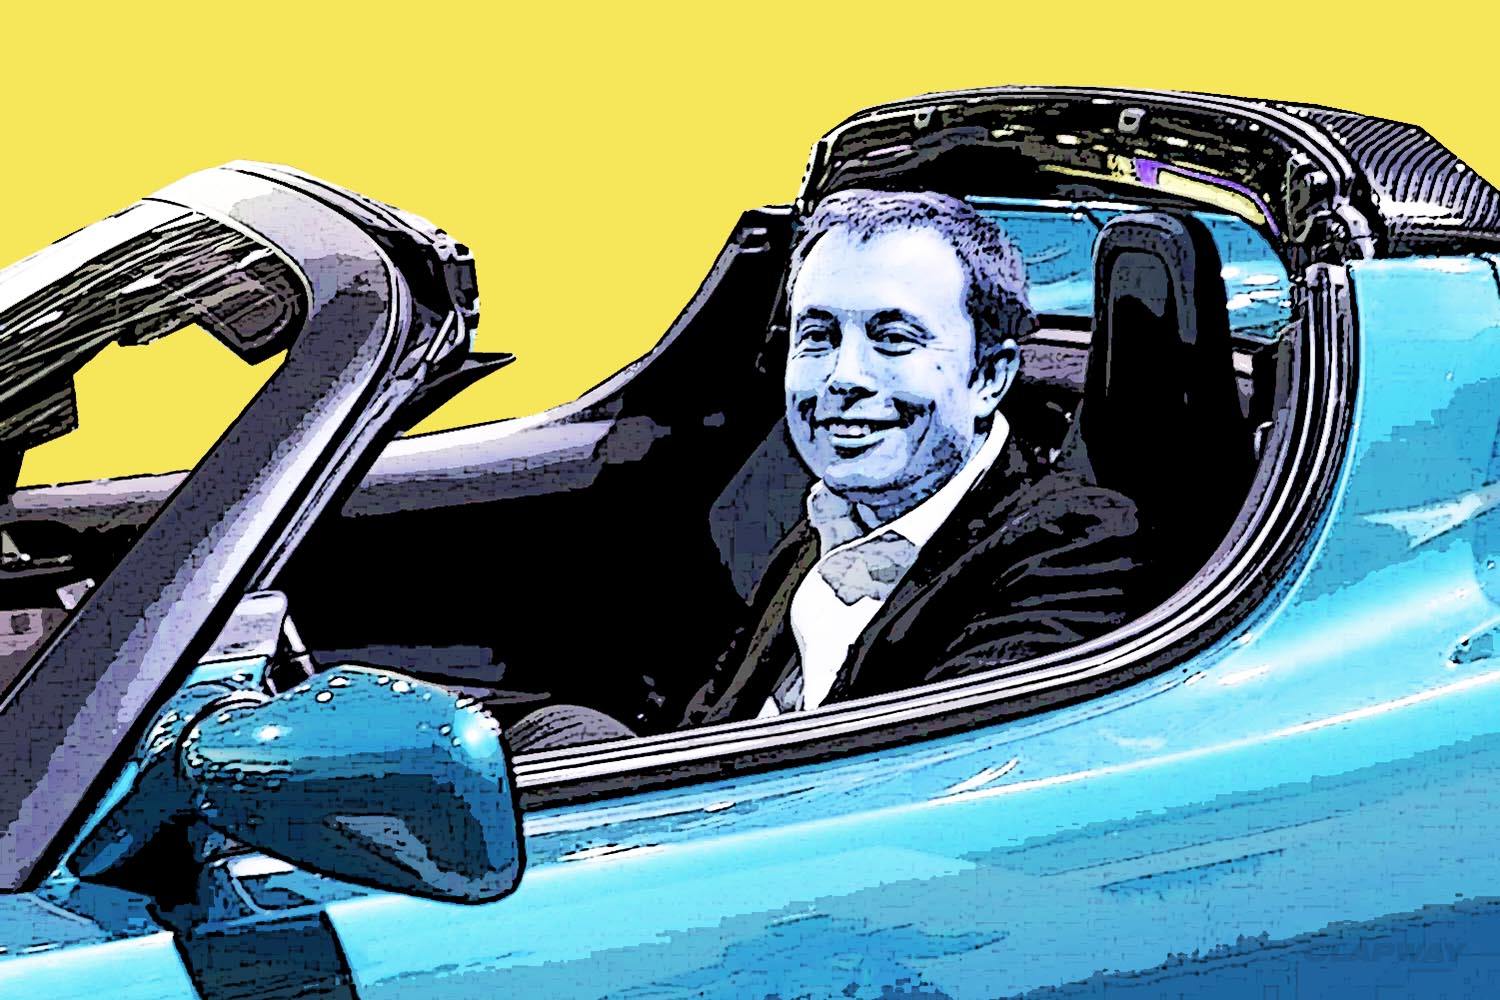 Elon Musk Tesla Already Ahead of Mercedes Self-Driving Cars1500 x 1000